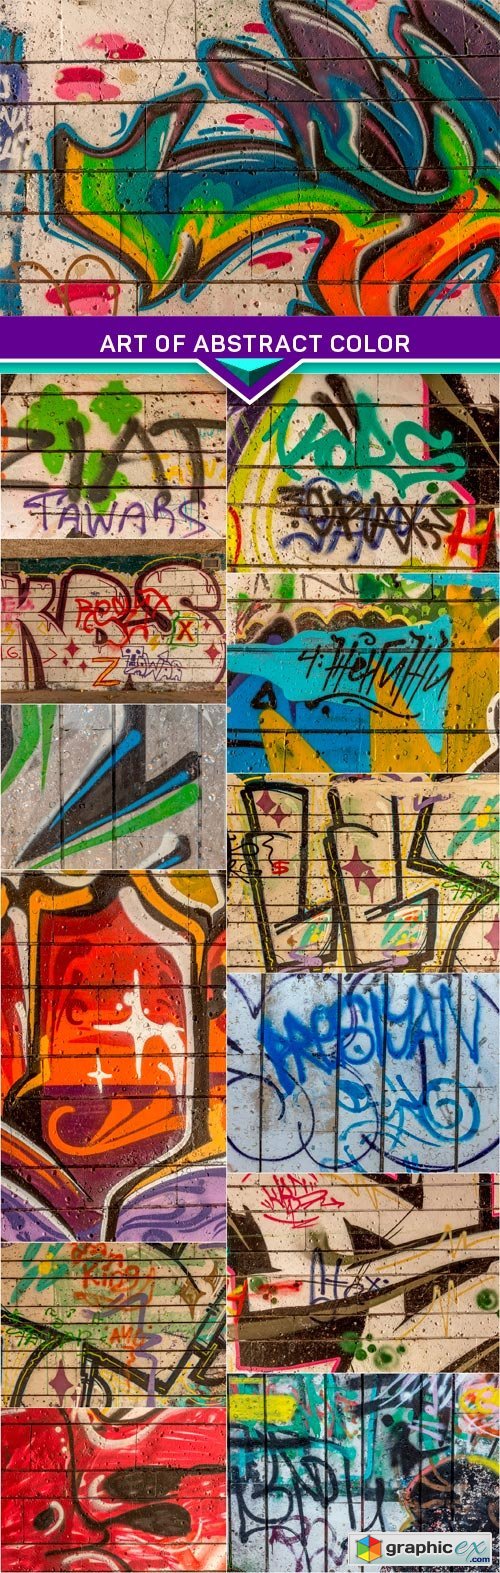 Art of abstract color creative drawing walls of city 13x JPEG